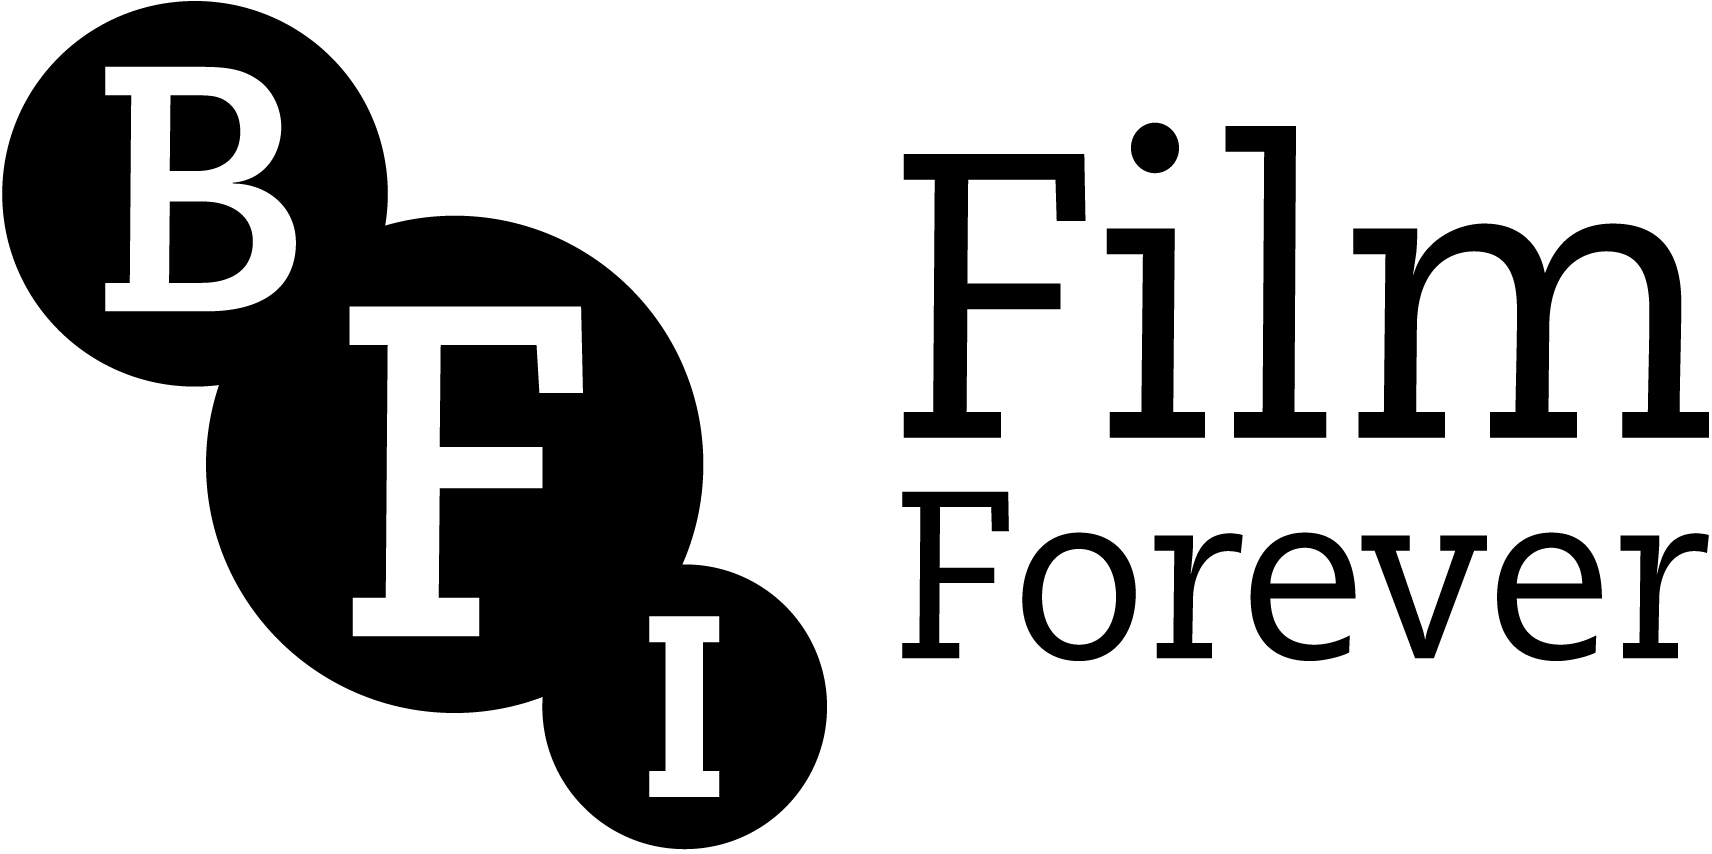 BFI Logo